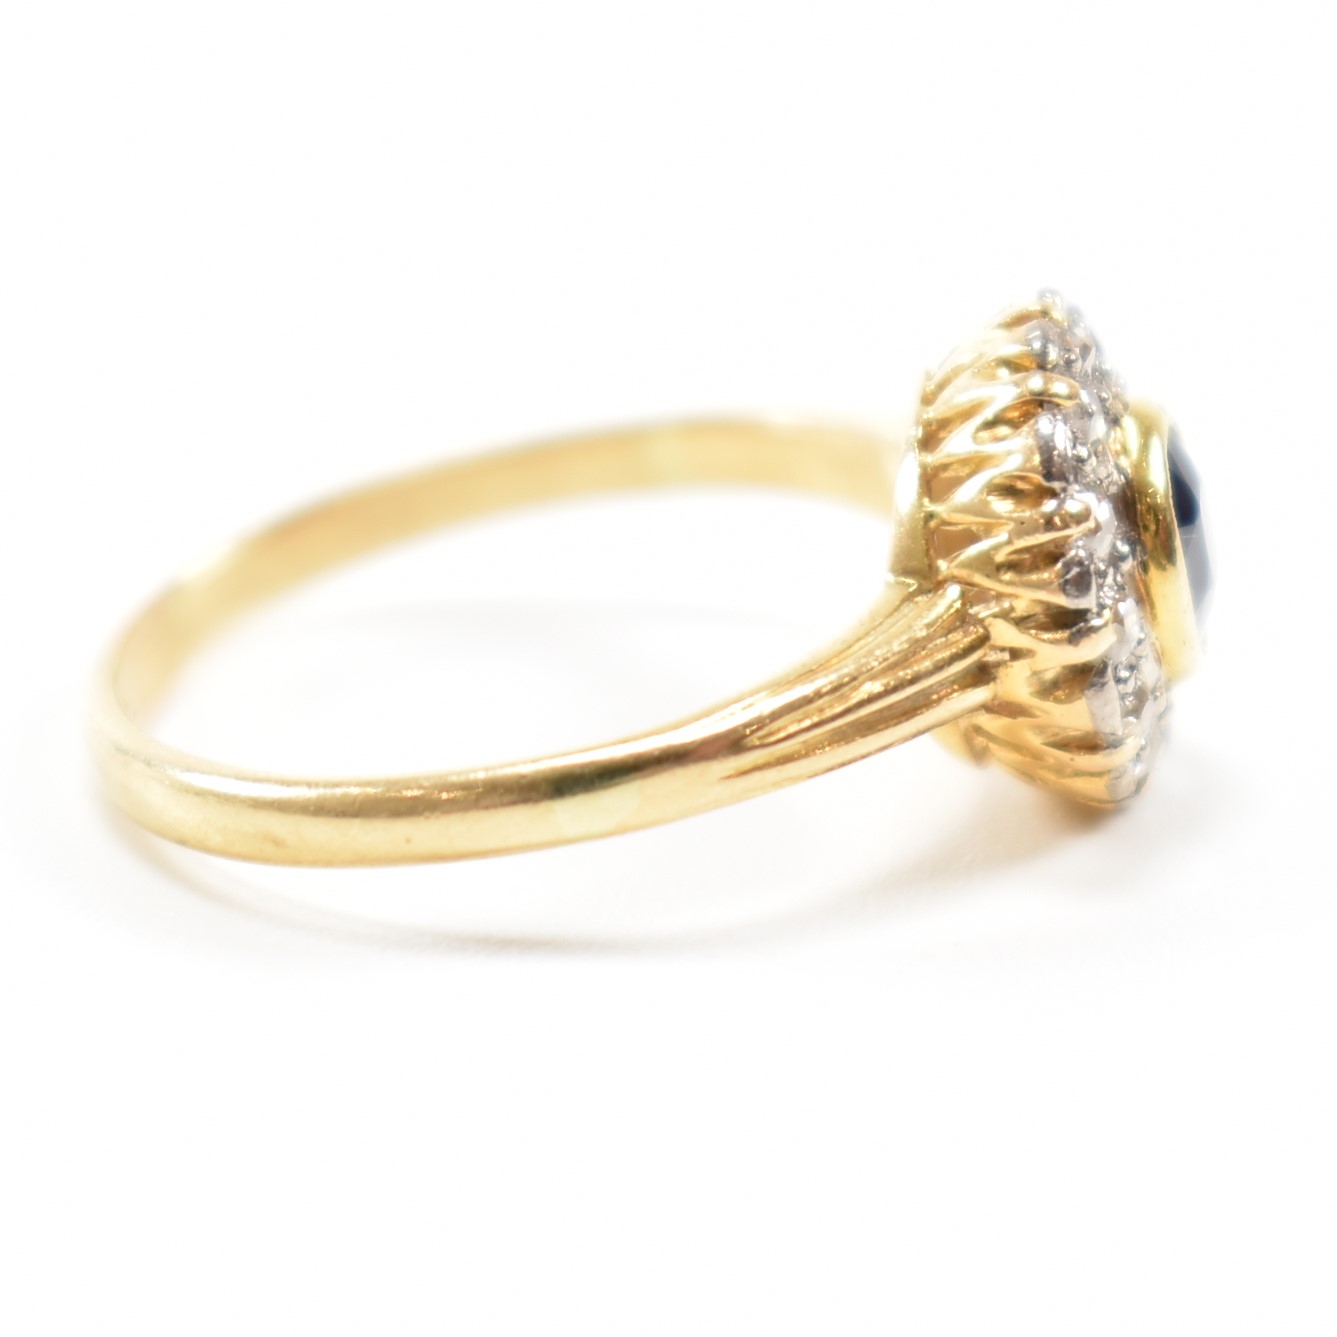 18CT GOLD SAPPHIRE & DIAMOND HALO RING - Image 4 of 7